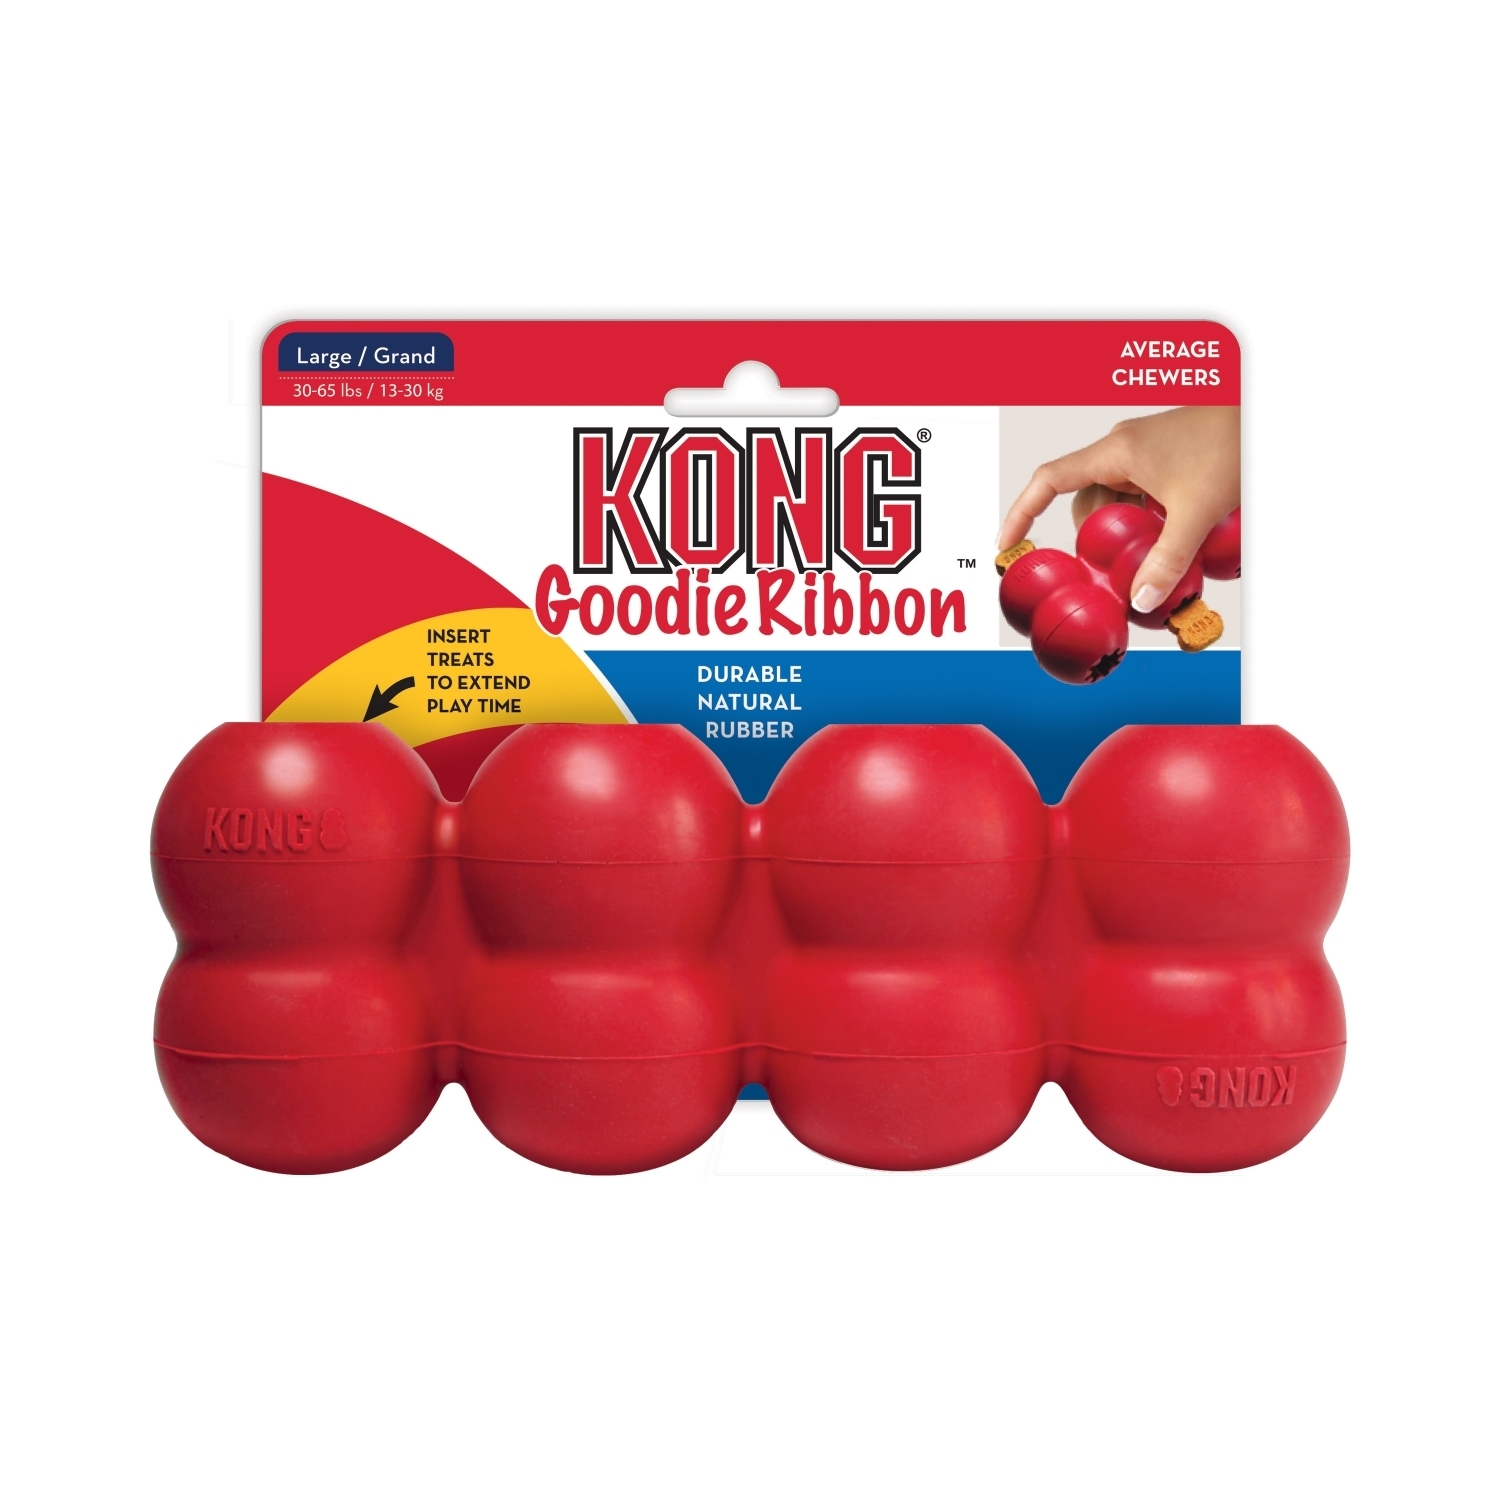 3 x KONG Good Ribbon Treat Hiding and Dispensing Natural Rubber Dog Toy - Large image 1